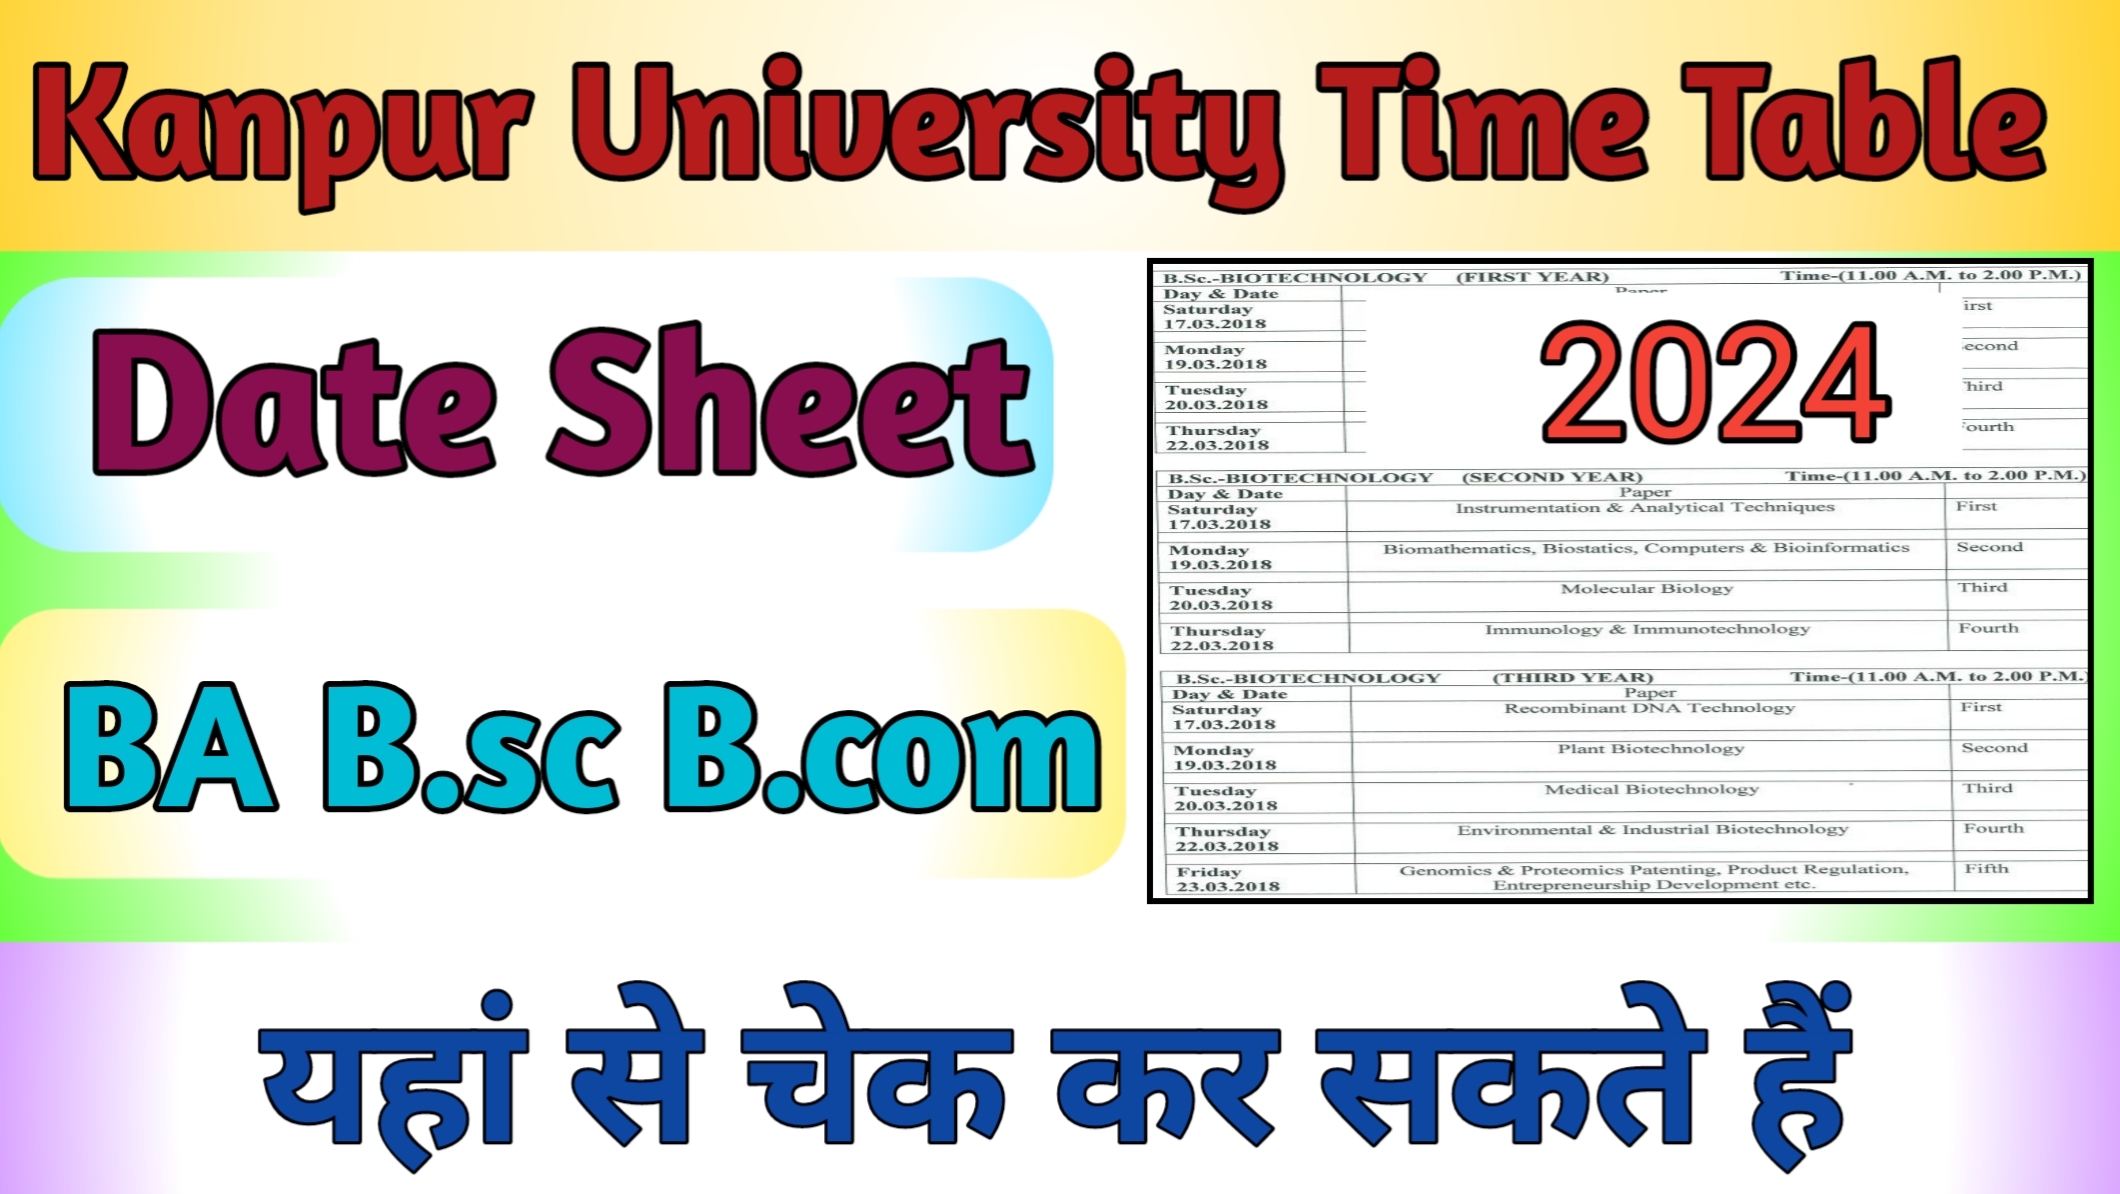 Kanpur University Time Table 2024 (Date Sheet)